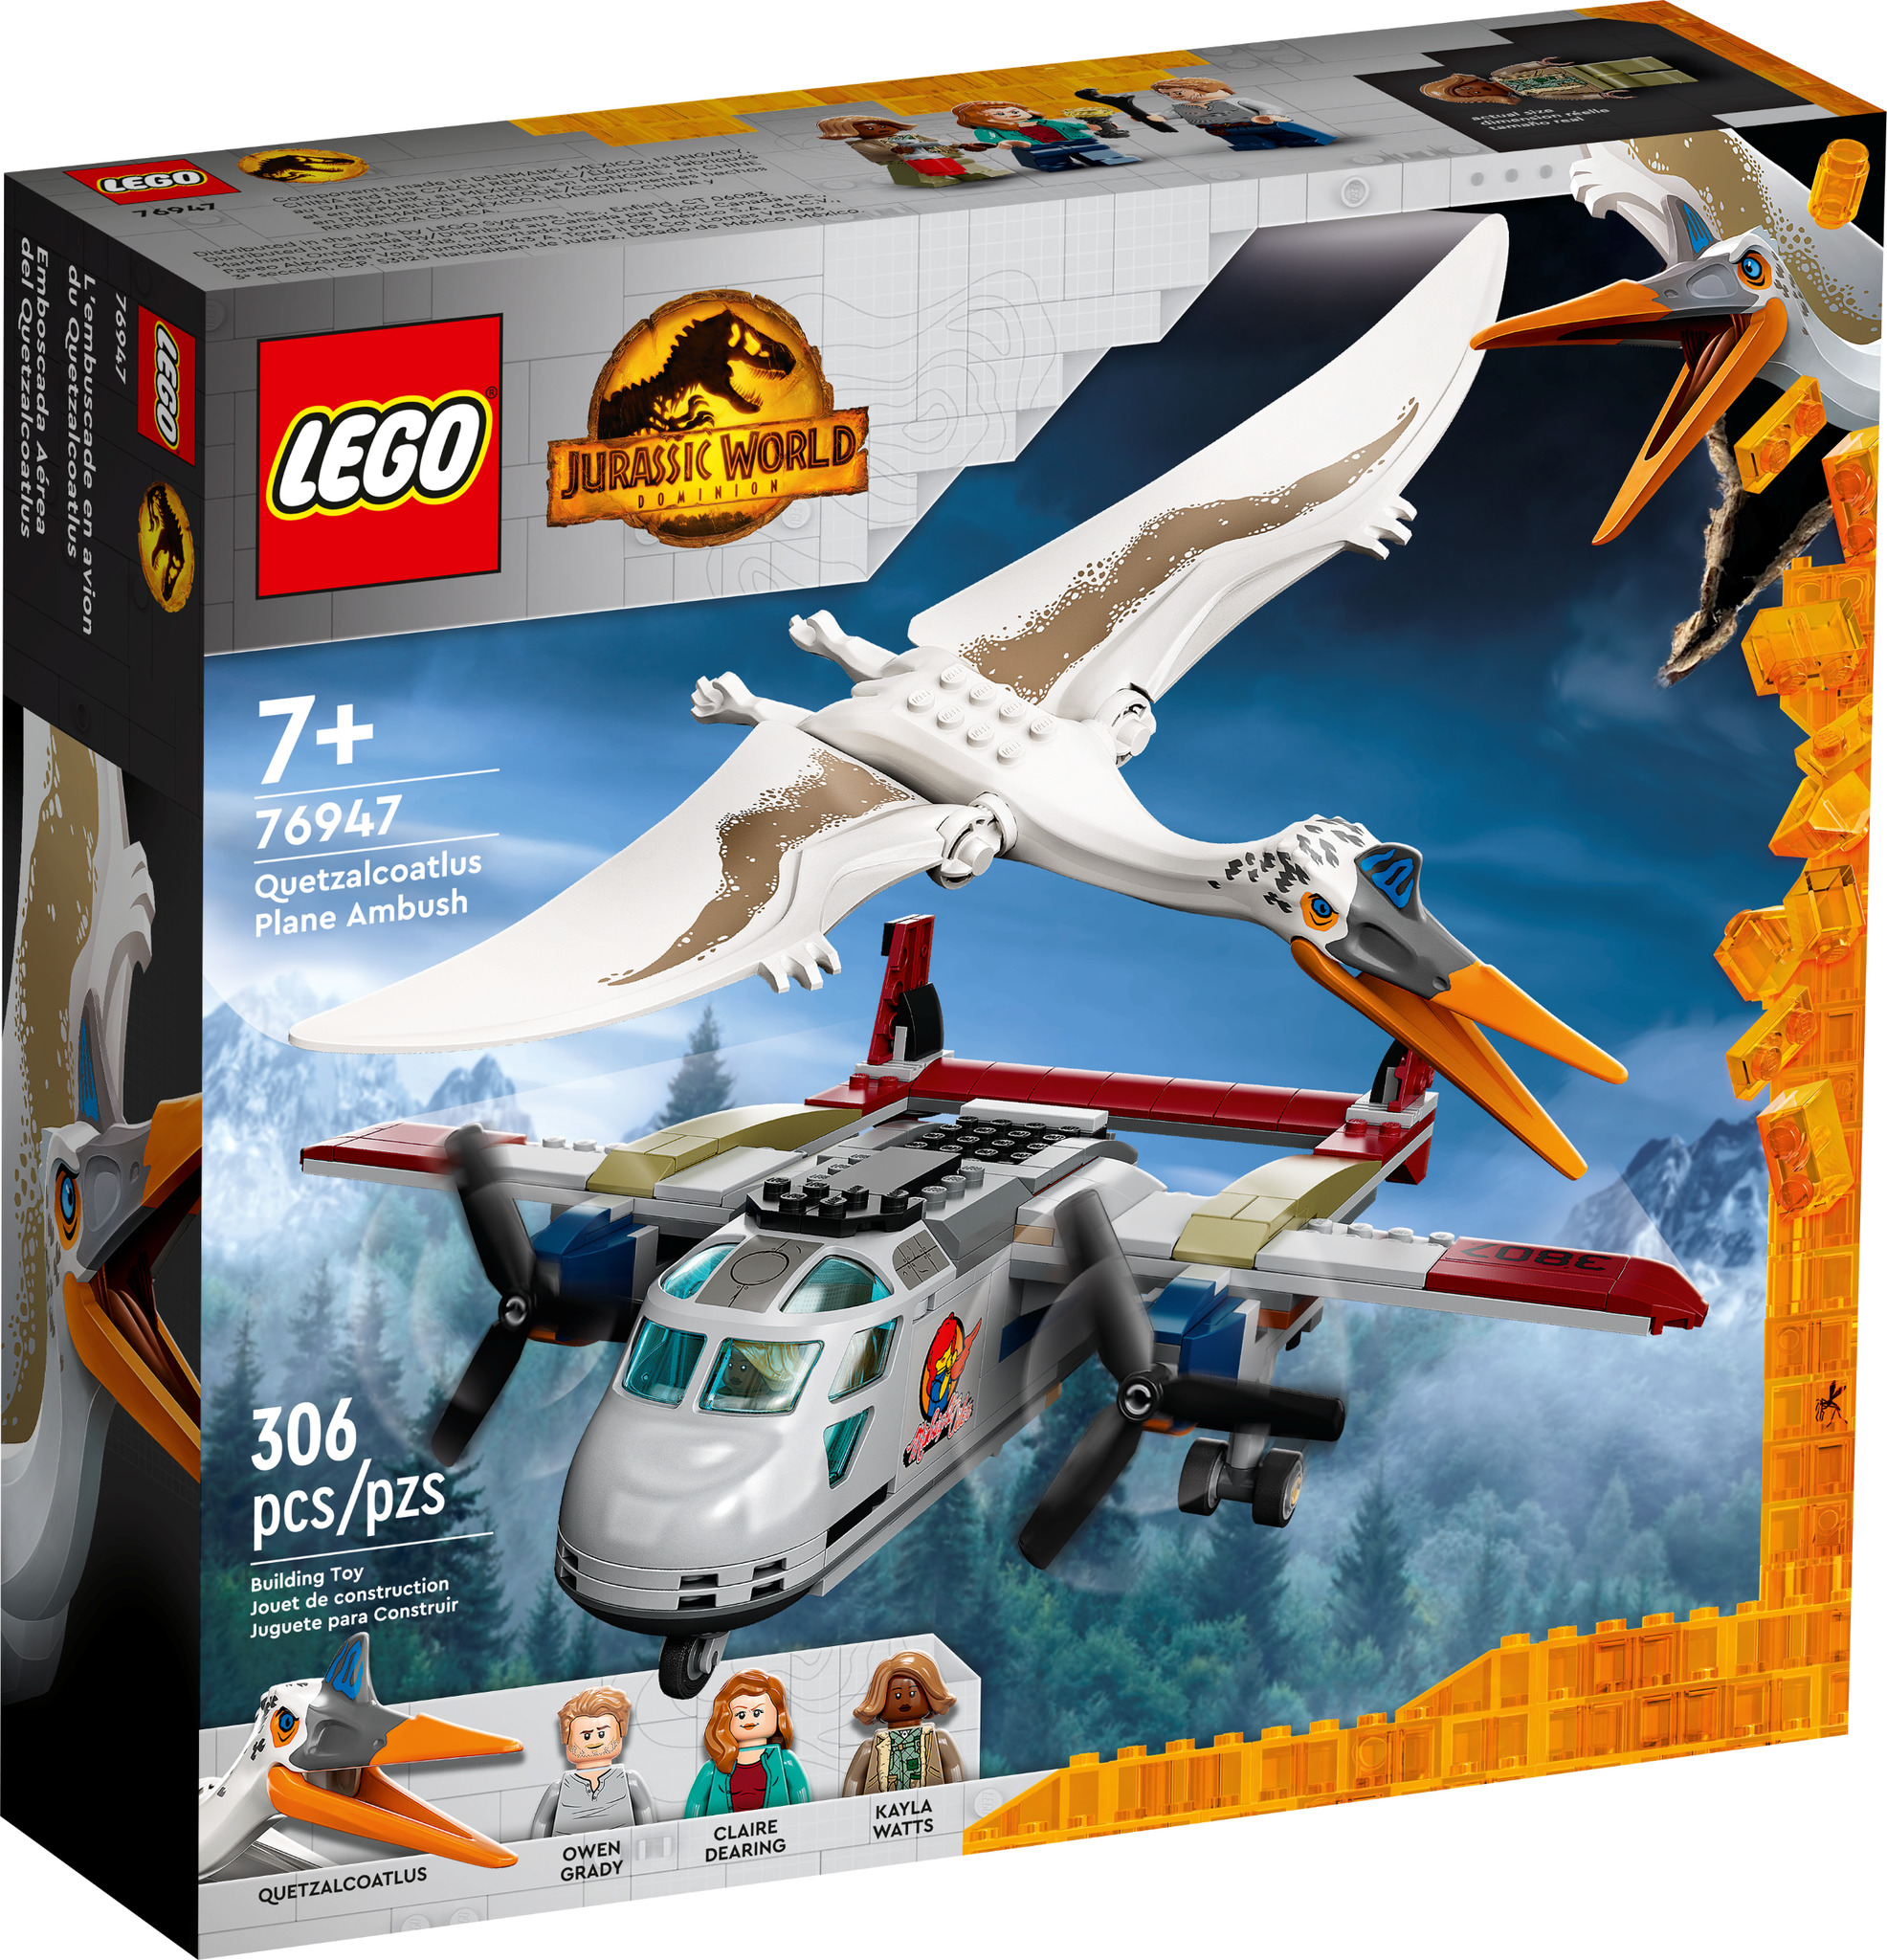 LEGO Jurassic World 76947 - Quetzalcoatlus: Agguato Aereo